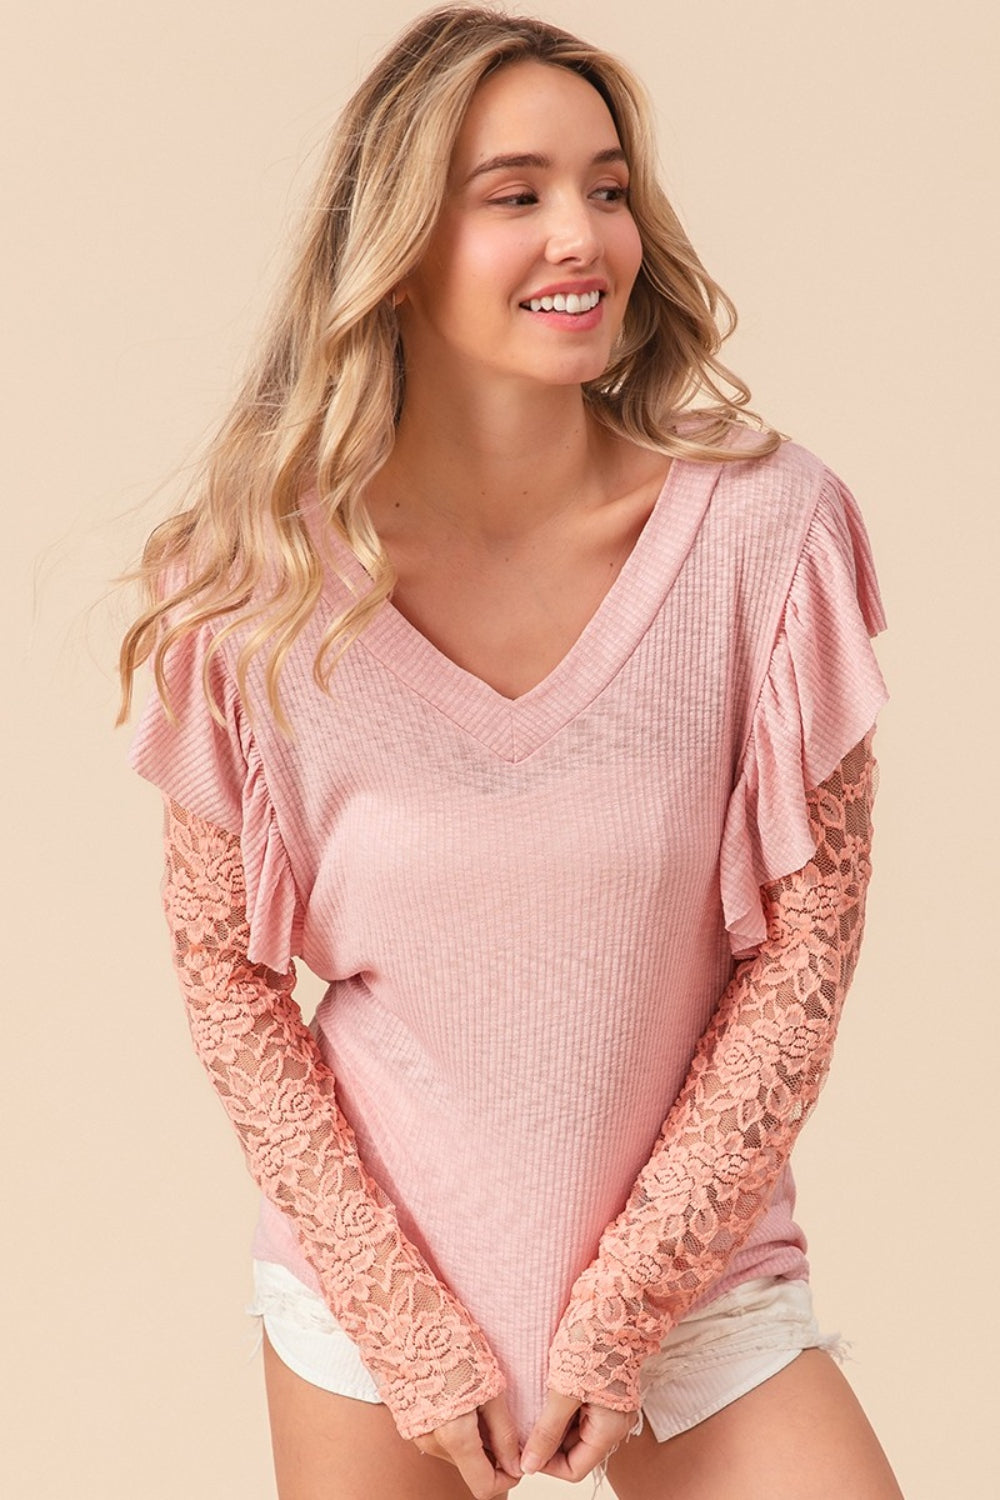 Blush Pink Ruffled Lace Sleeve Rib Knit Top